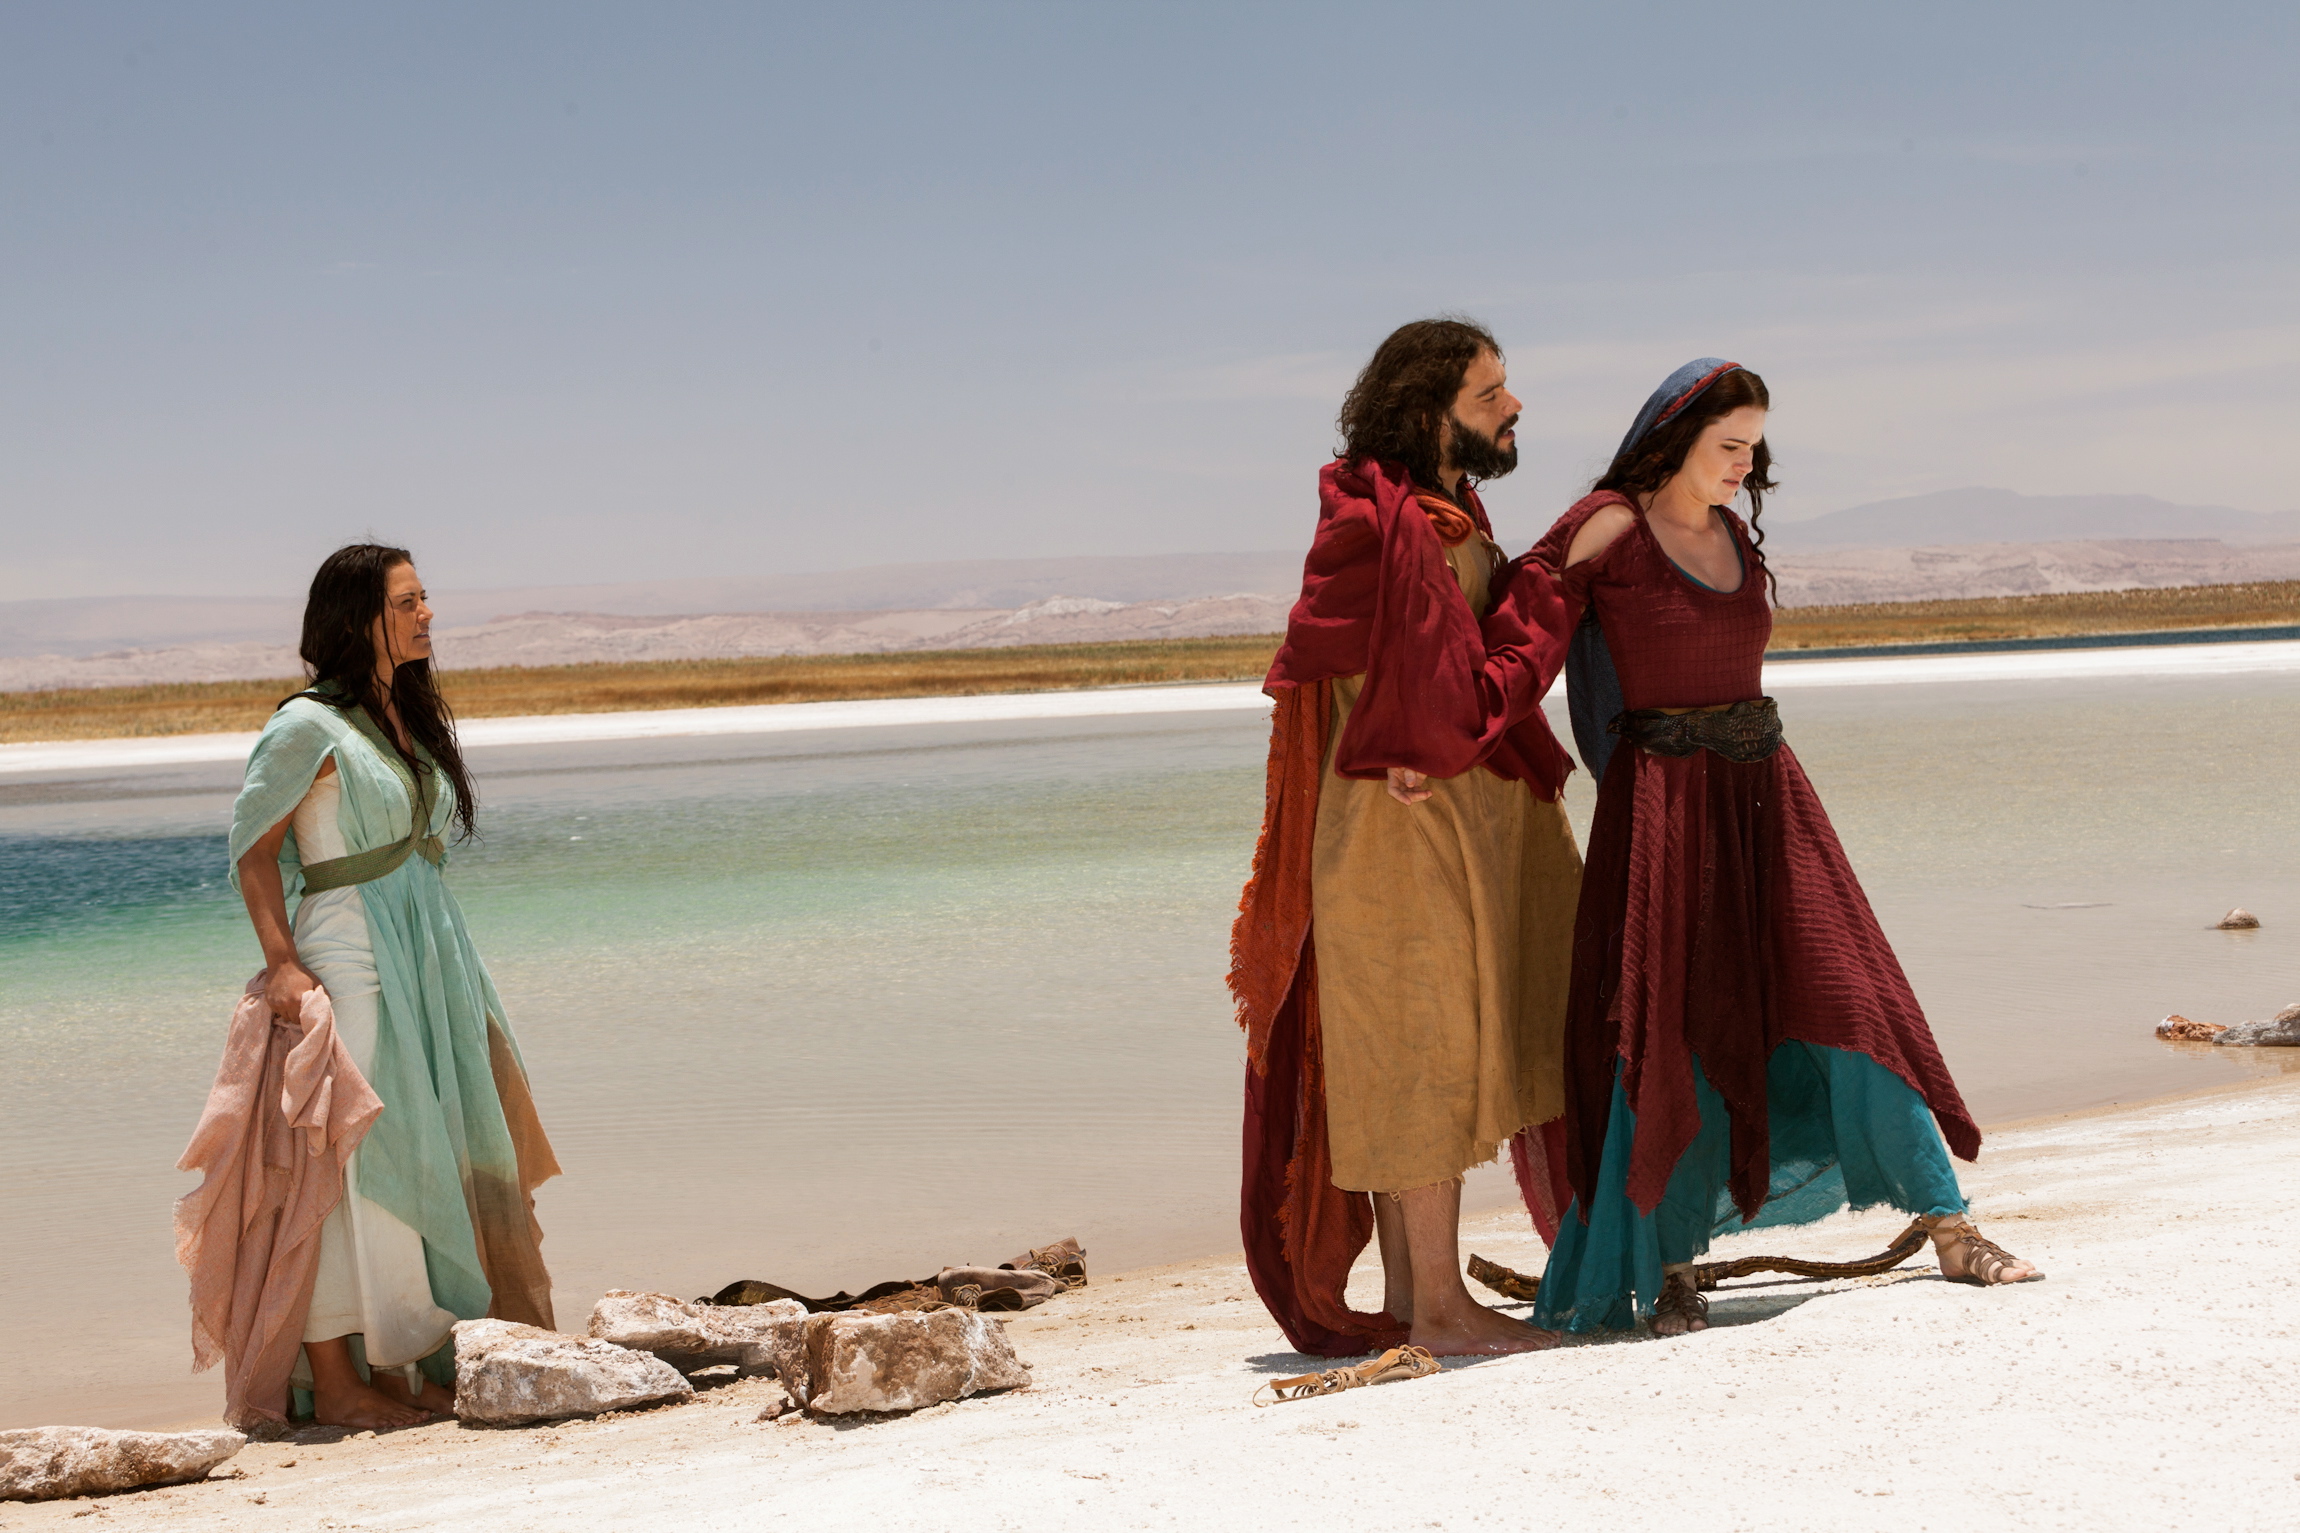 Nanda Ziegler, Guilherme Winter and Carla Regina filming in the Atacama desert, Chile, fo José do Egito (TV series 2013).